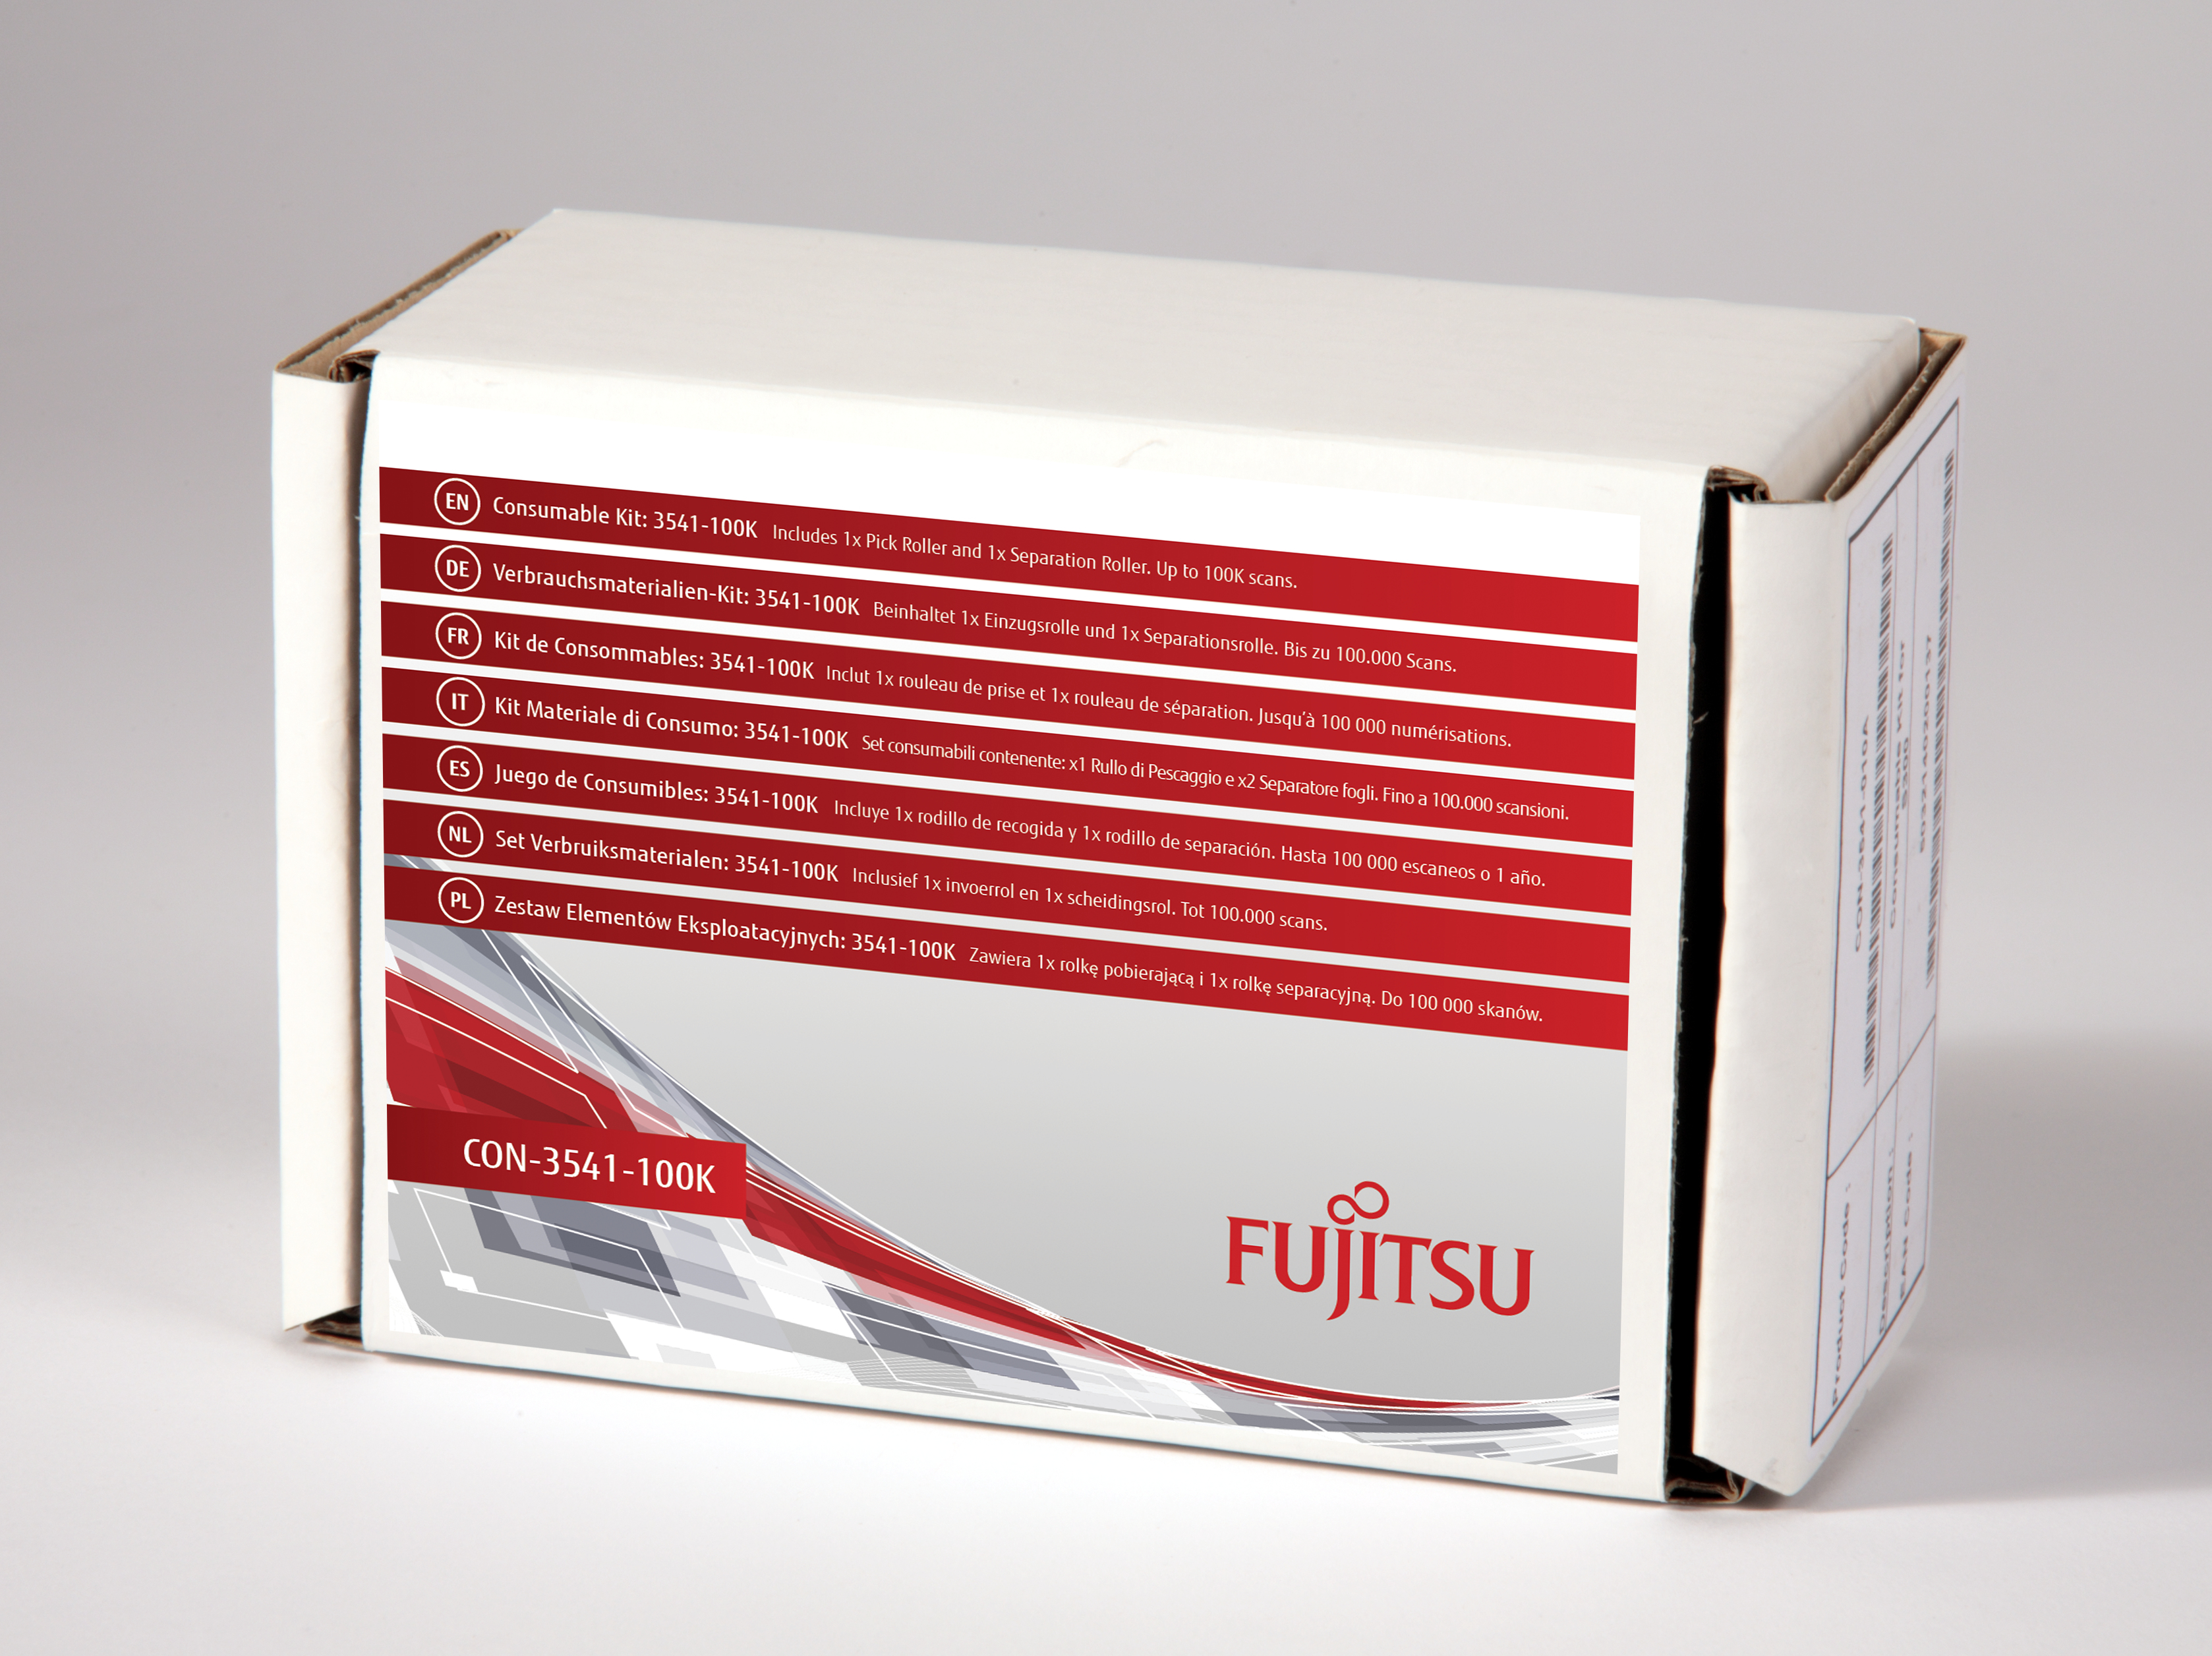 Fujitsu Consumable Kit: 3541-100K